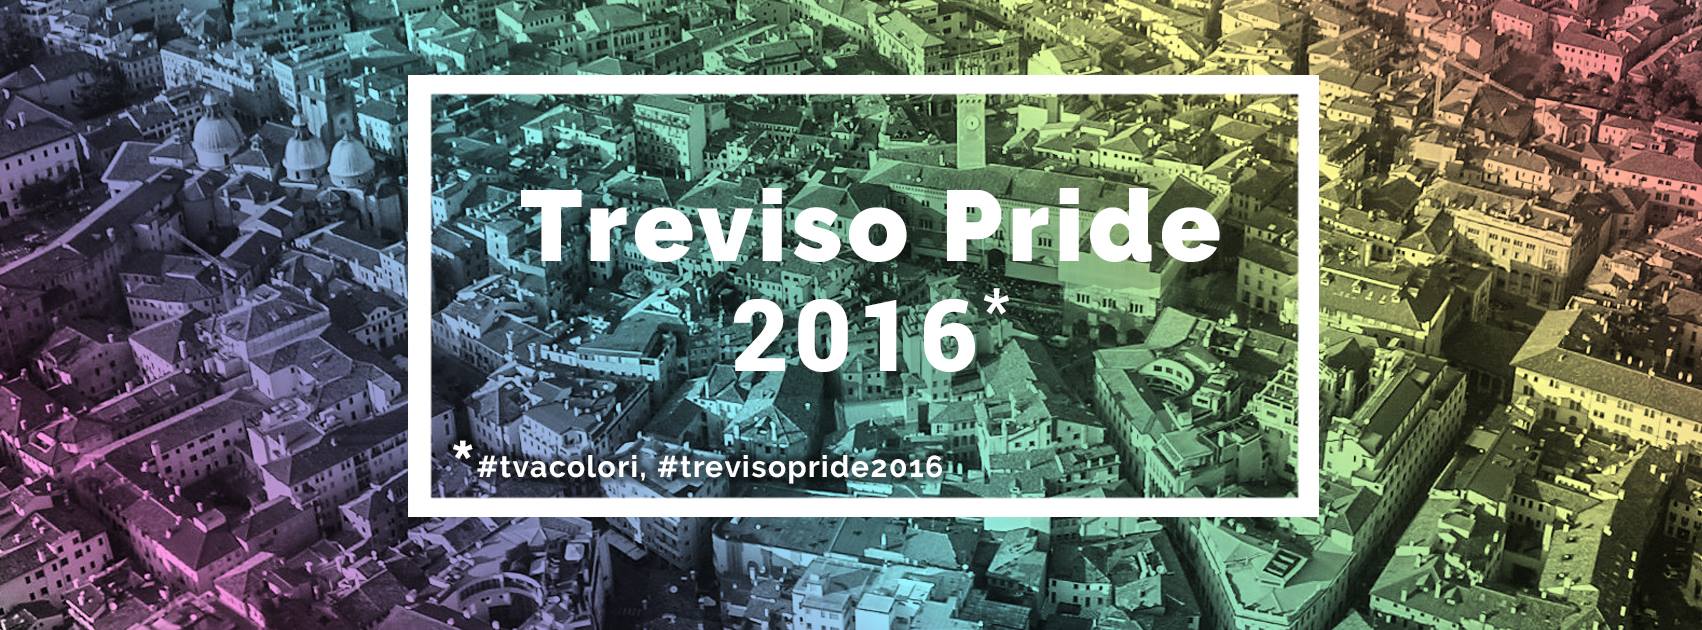 treviso pride 2016